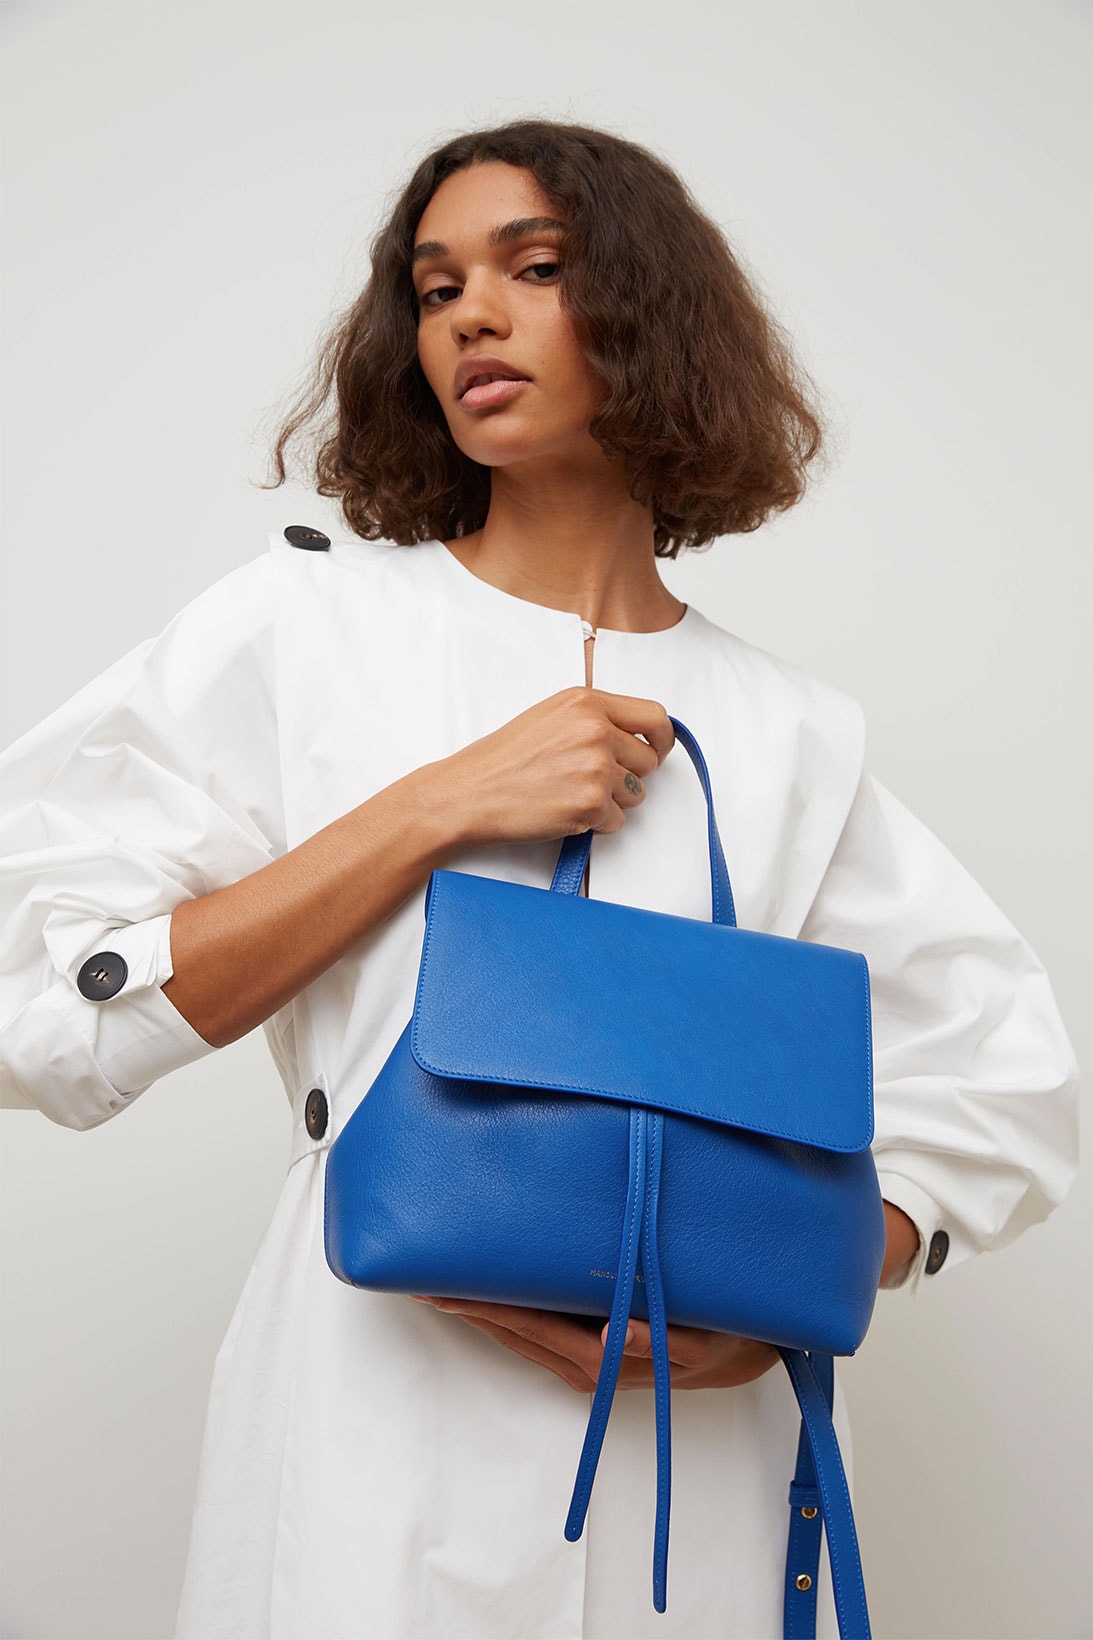 mansur gavriel soft lady handbag calfskin leather blue white dress model shot